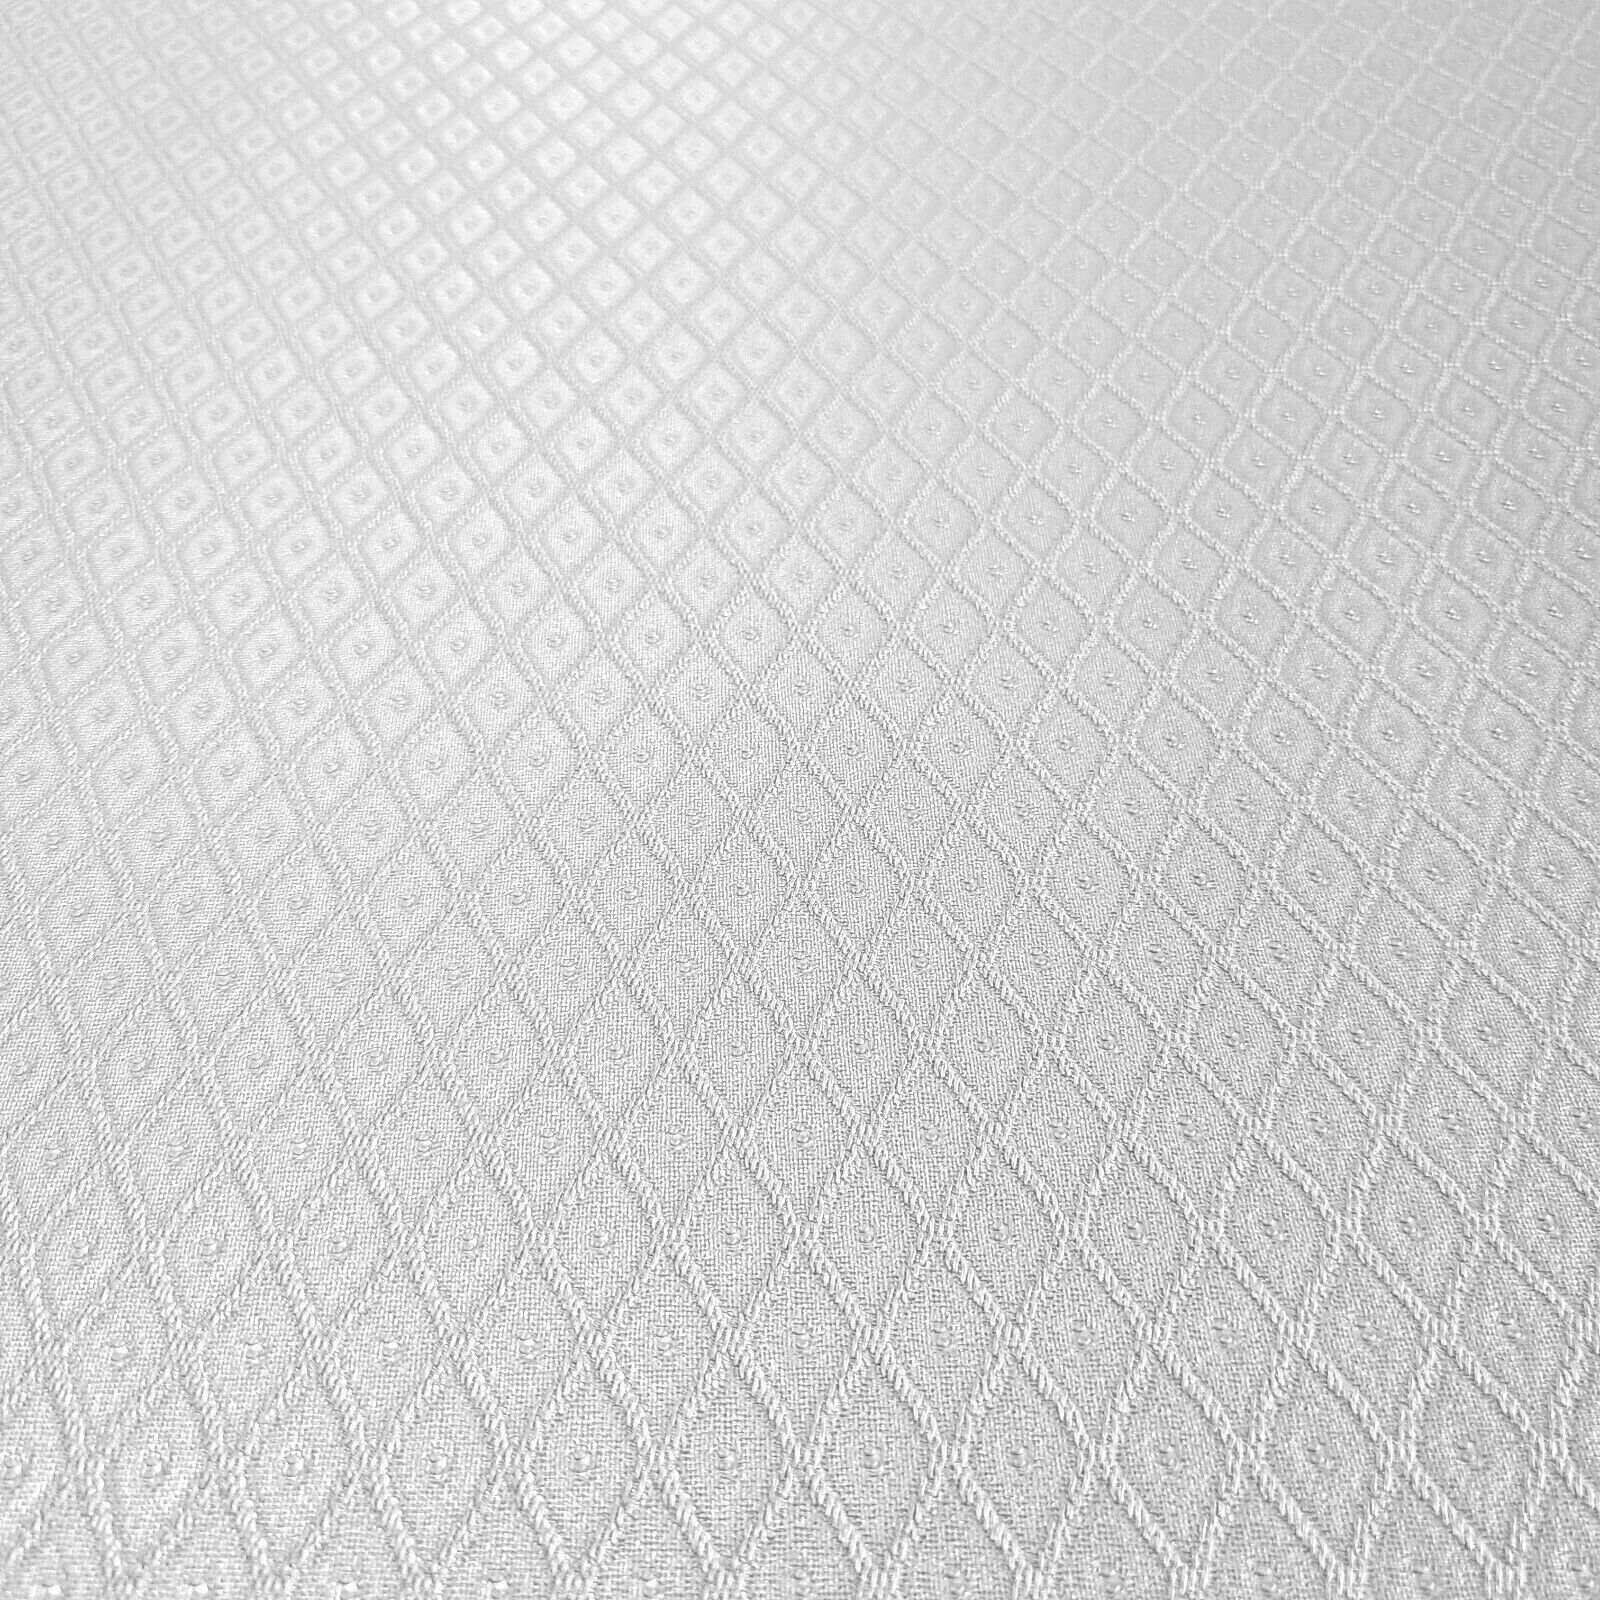 Off-White wallpaper wallpaper by GAVRIEL2007 - Download on ZEDGE